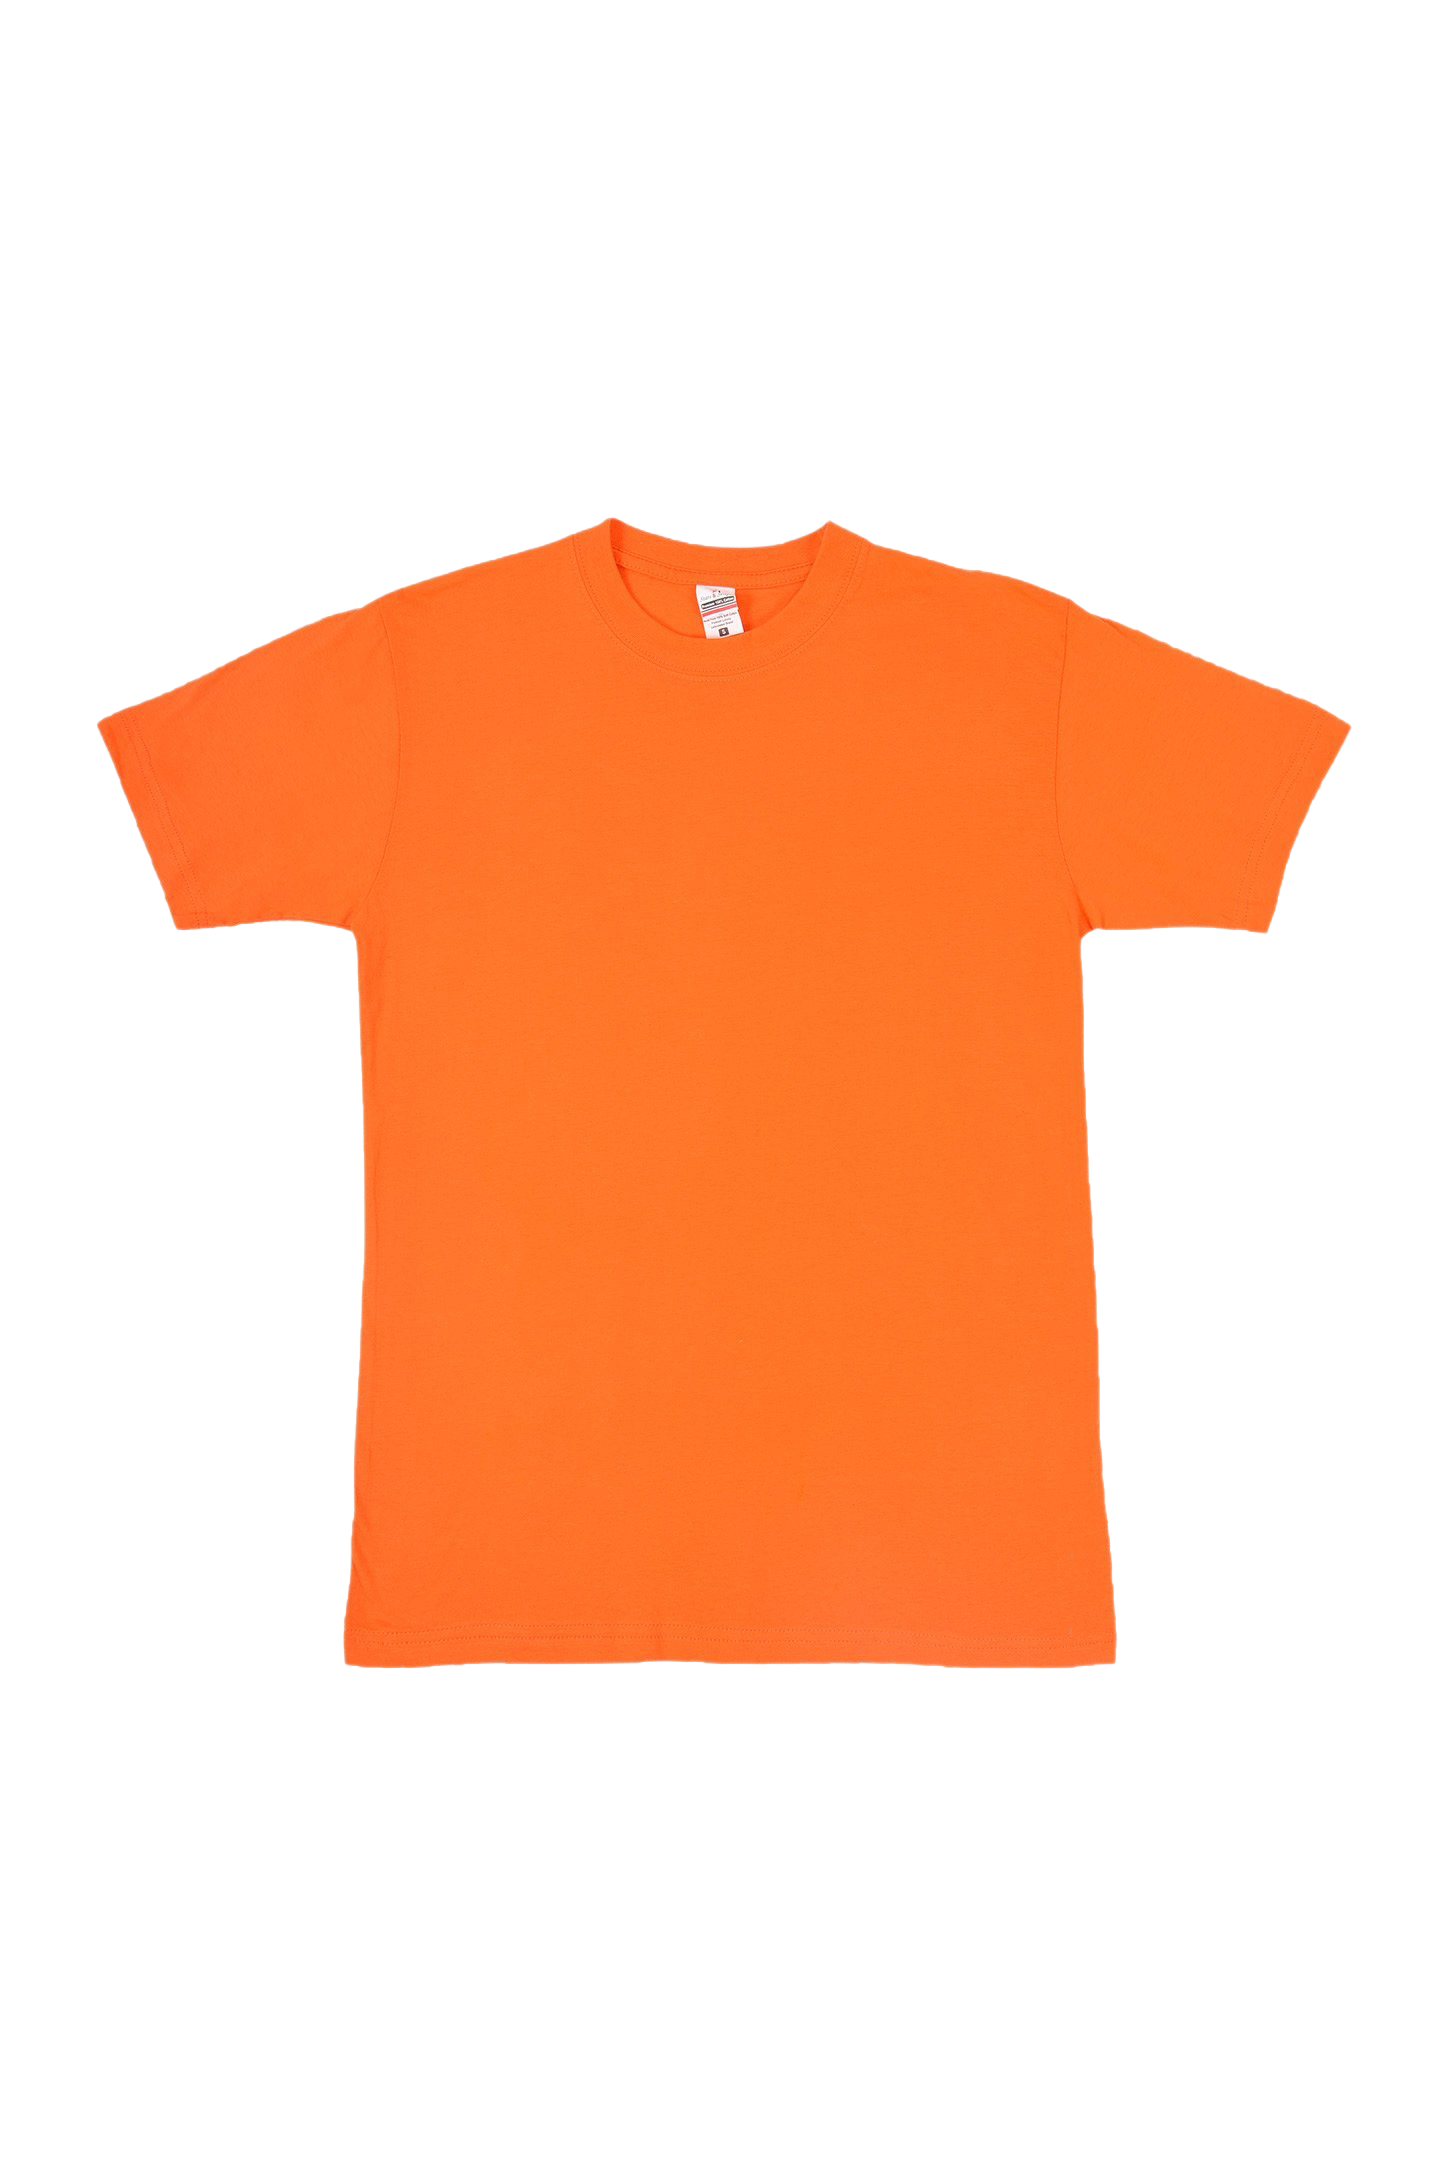 Plain Orange T-Shirt PNG Image